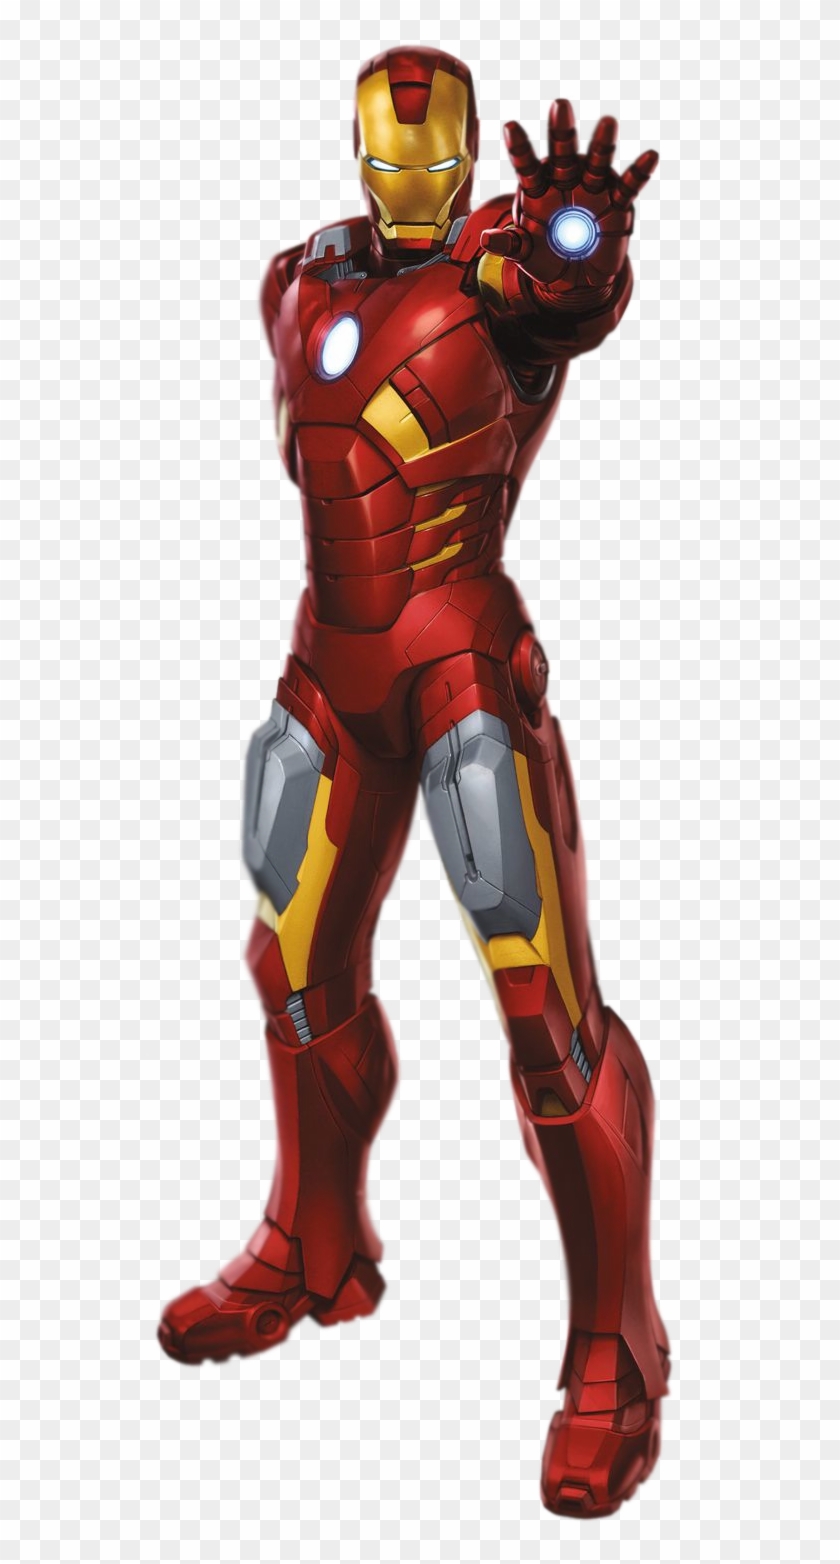 Iron Man Avengers Png Clipart